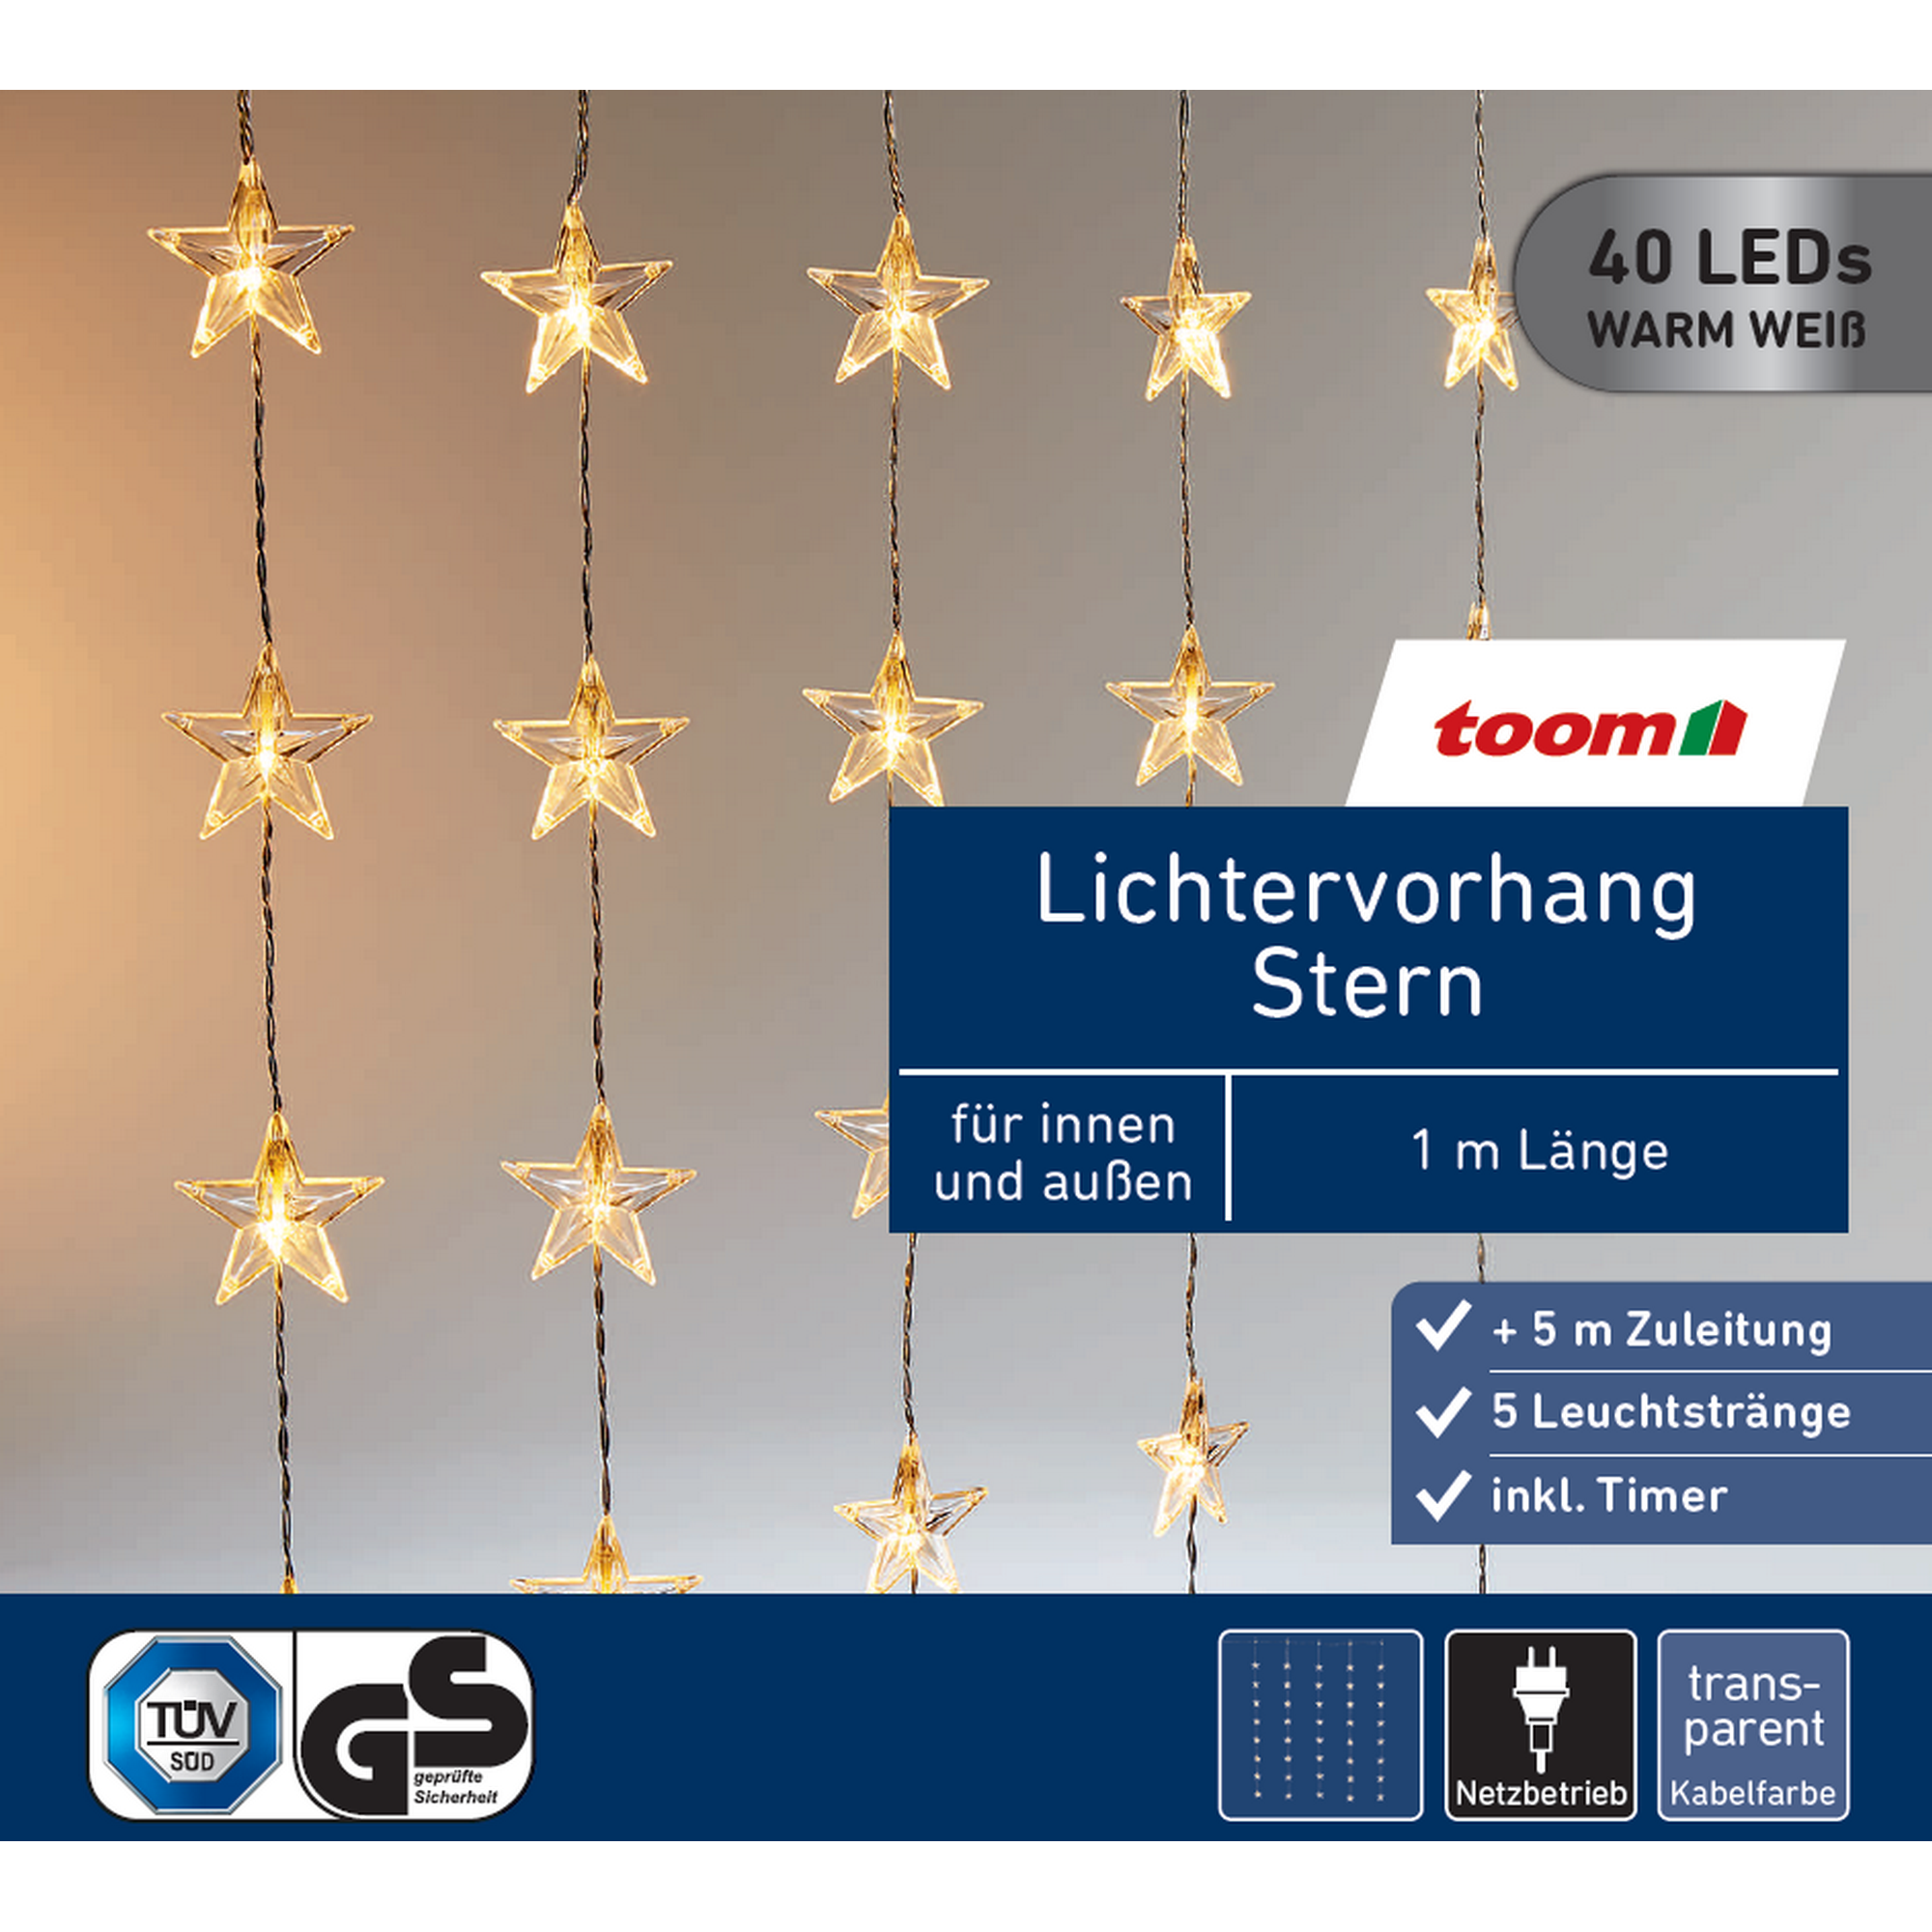 LED-Lichtervorhang 'Stern' 40 LEDs warmweiß 100 cm + product picture